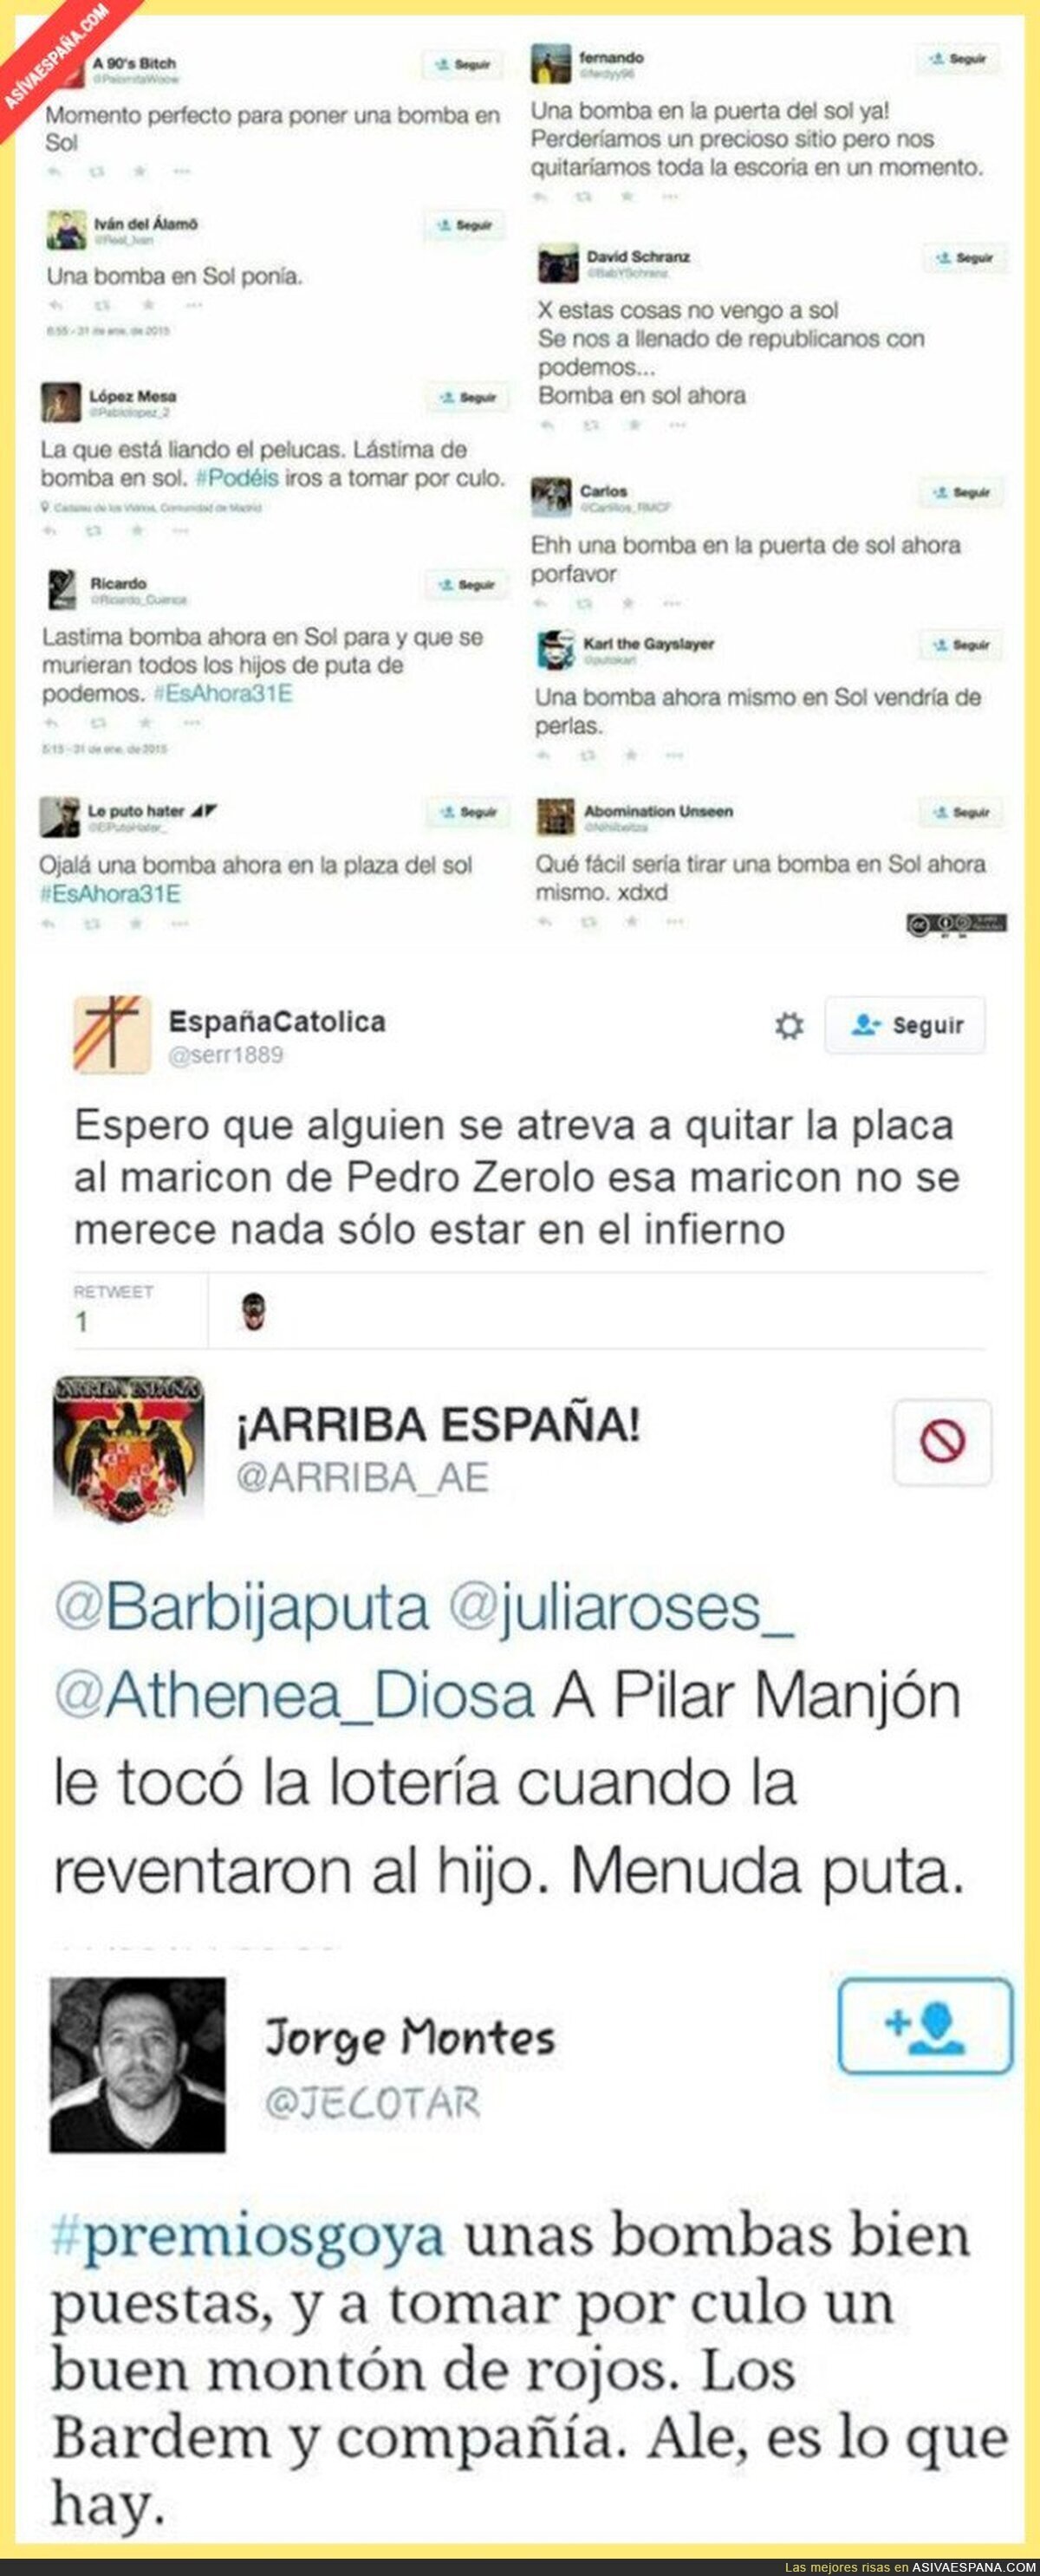 En España eres libre de poner estos tuits si eres de derechas